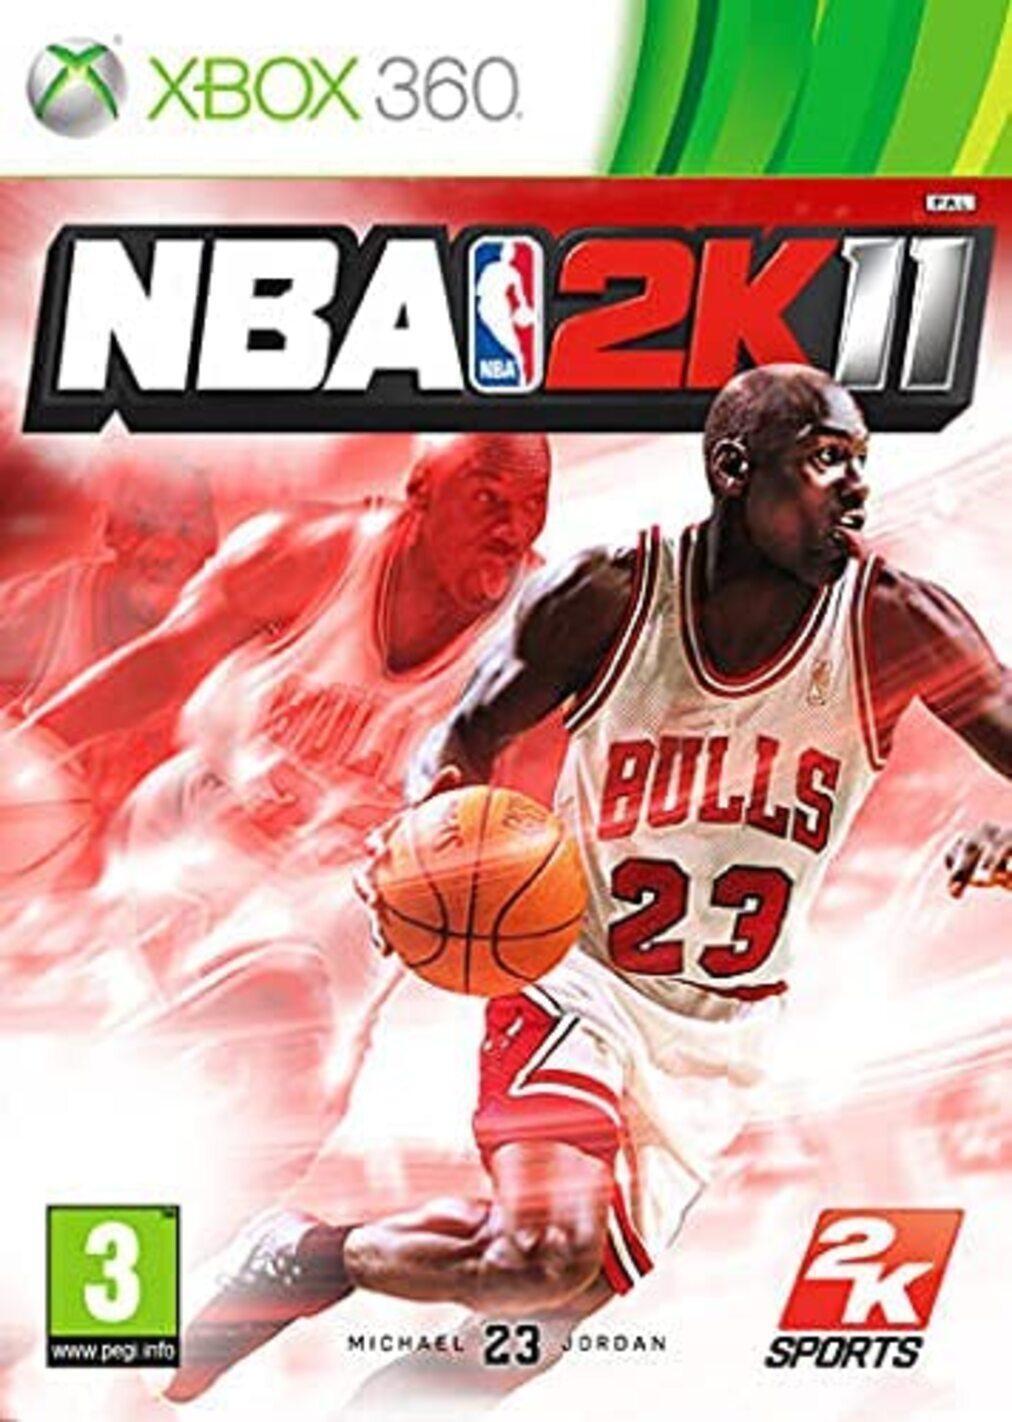 Jeu XBox 360 NBA 2K11 - édition Michael Jordan